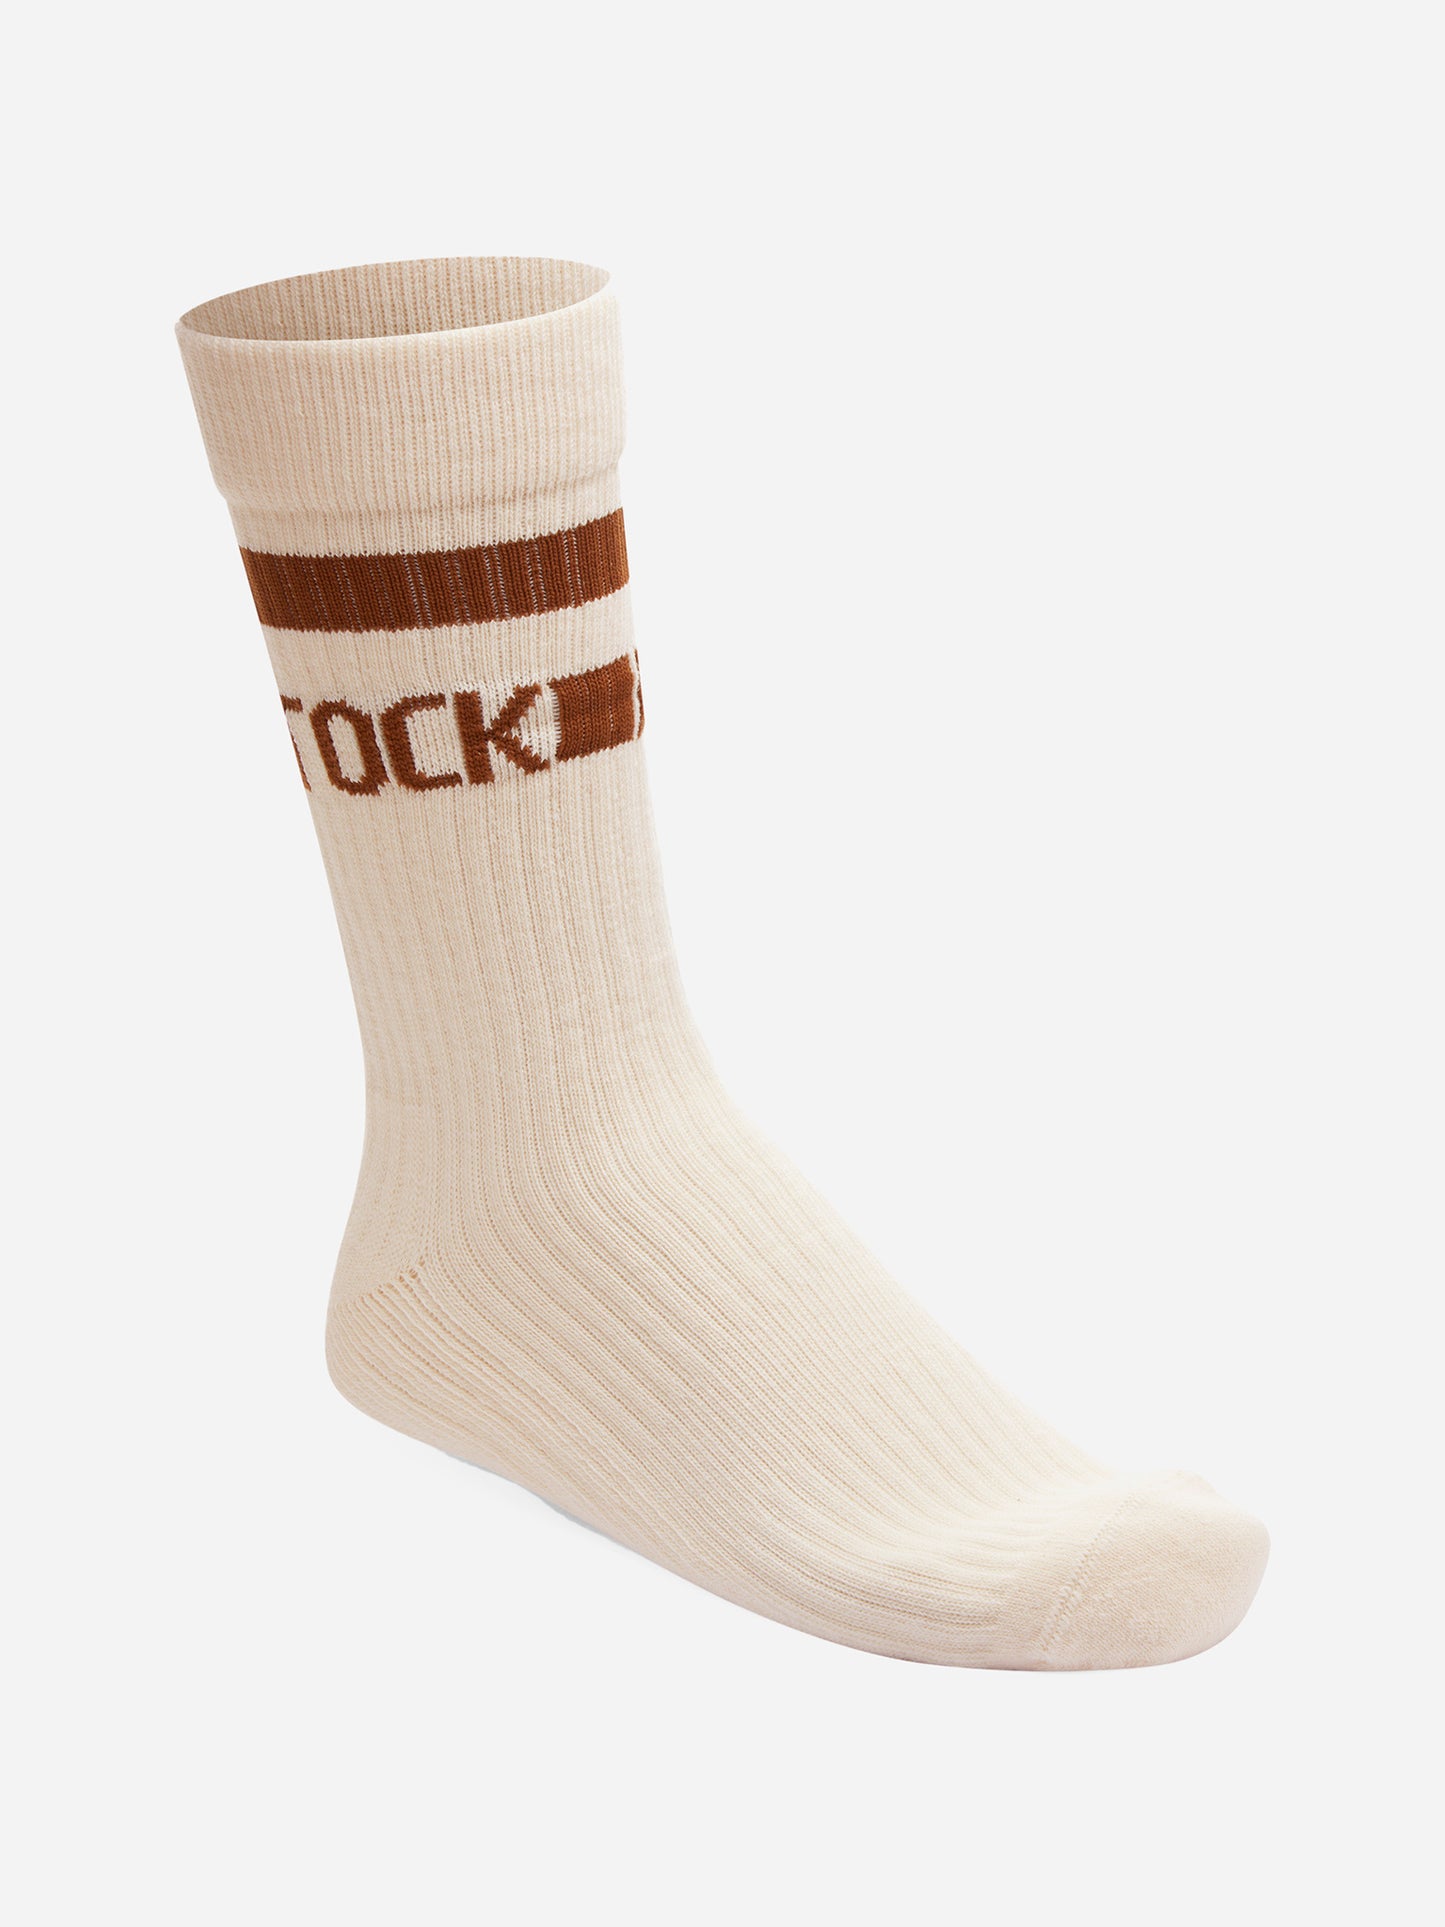 Birkenstock Women's Tennis Socks